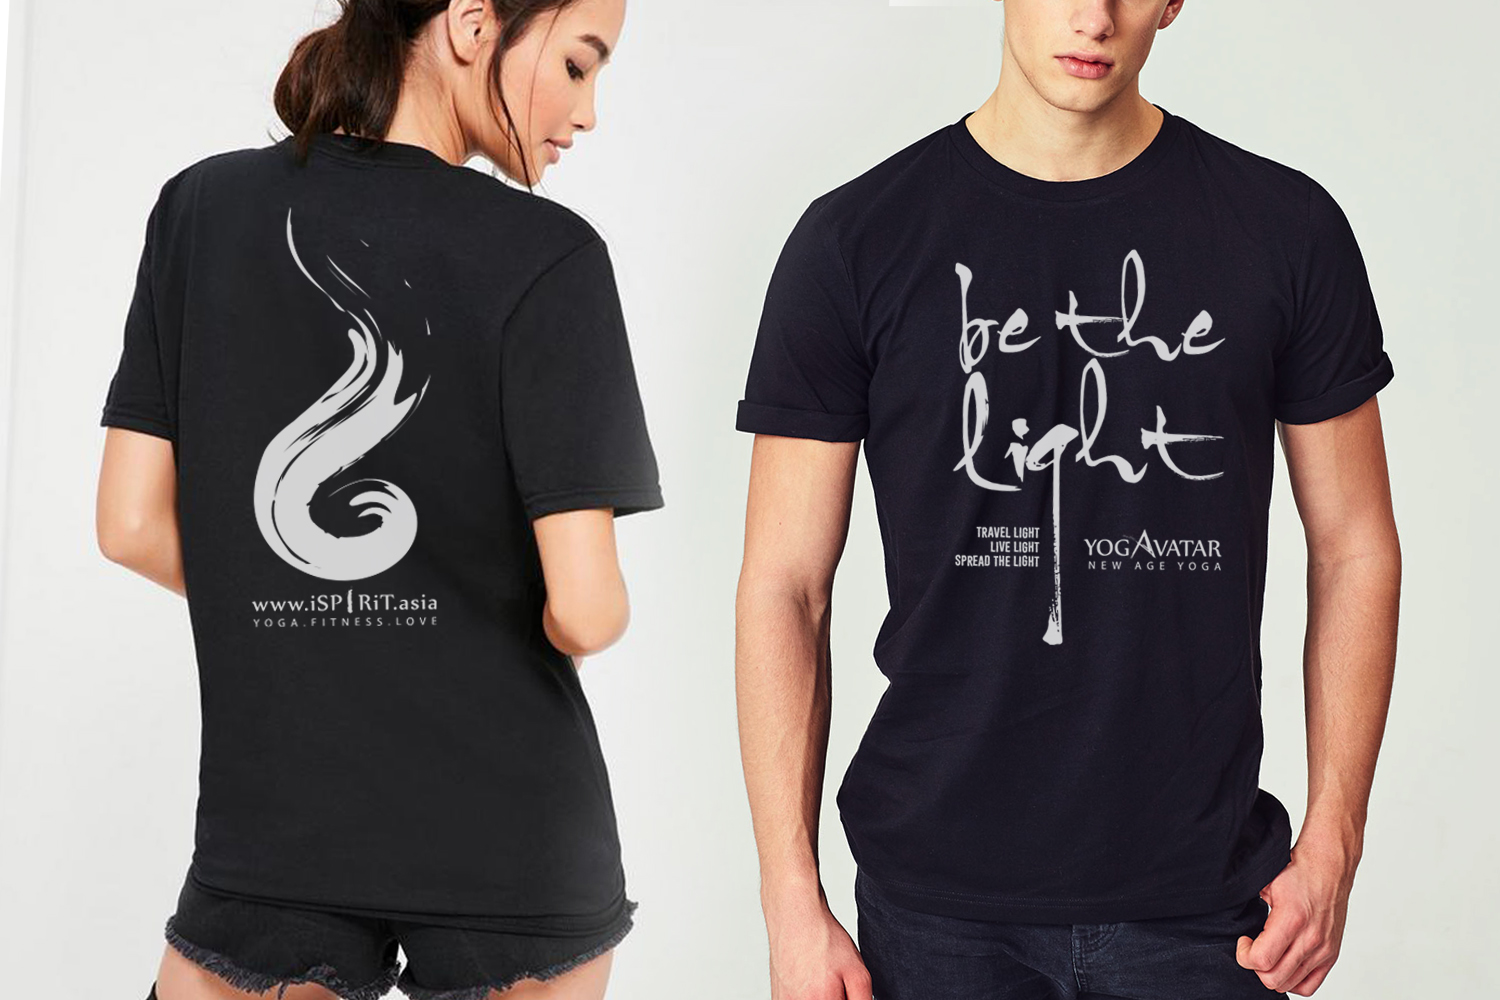 Be the light Yogavatar ispirit t-shirt